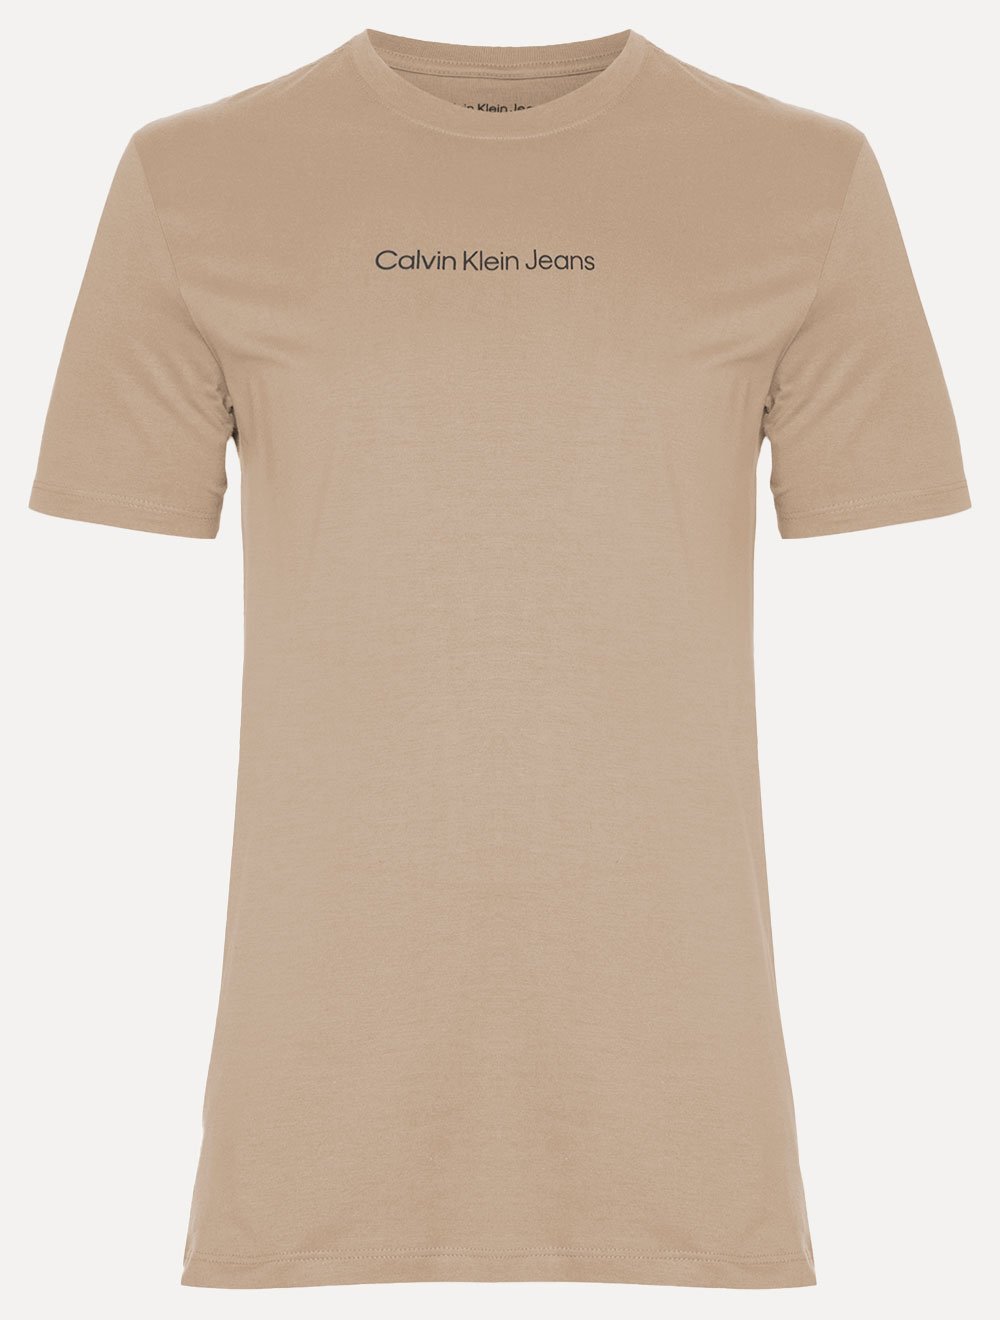 Camiseta Calvin Klein Jeans Masculina Institutional New Logo Cáqui Médio